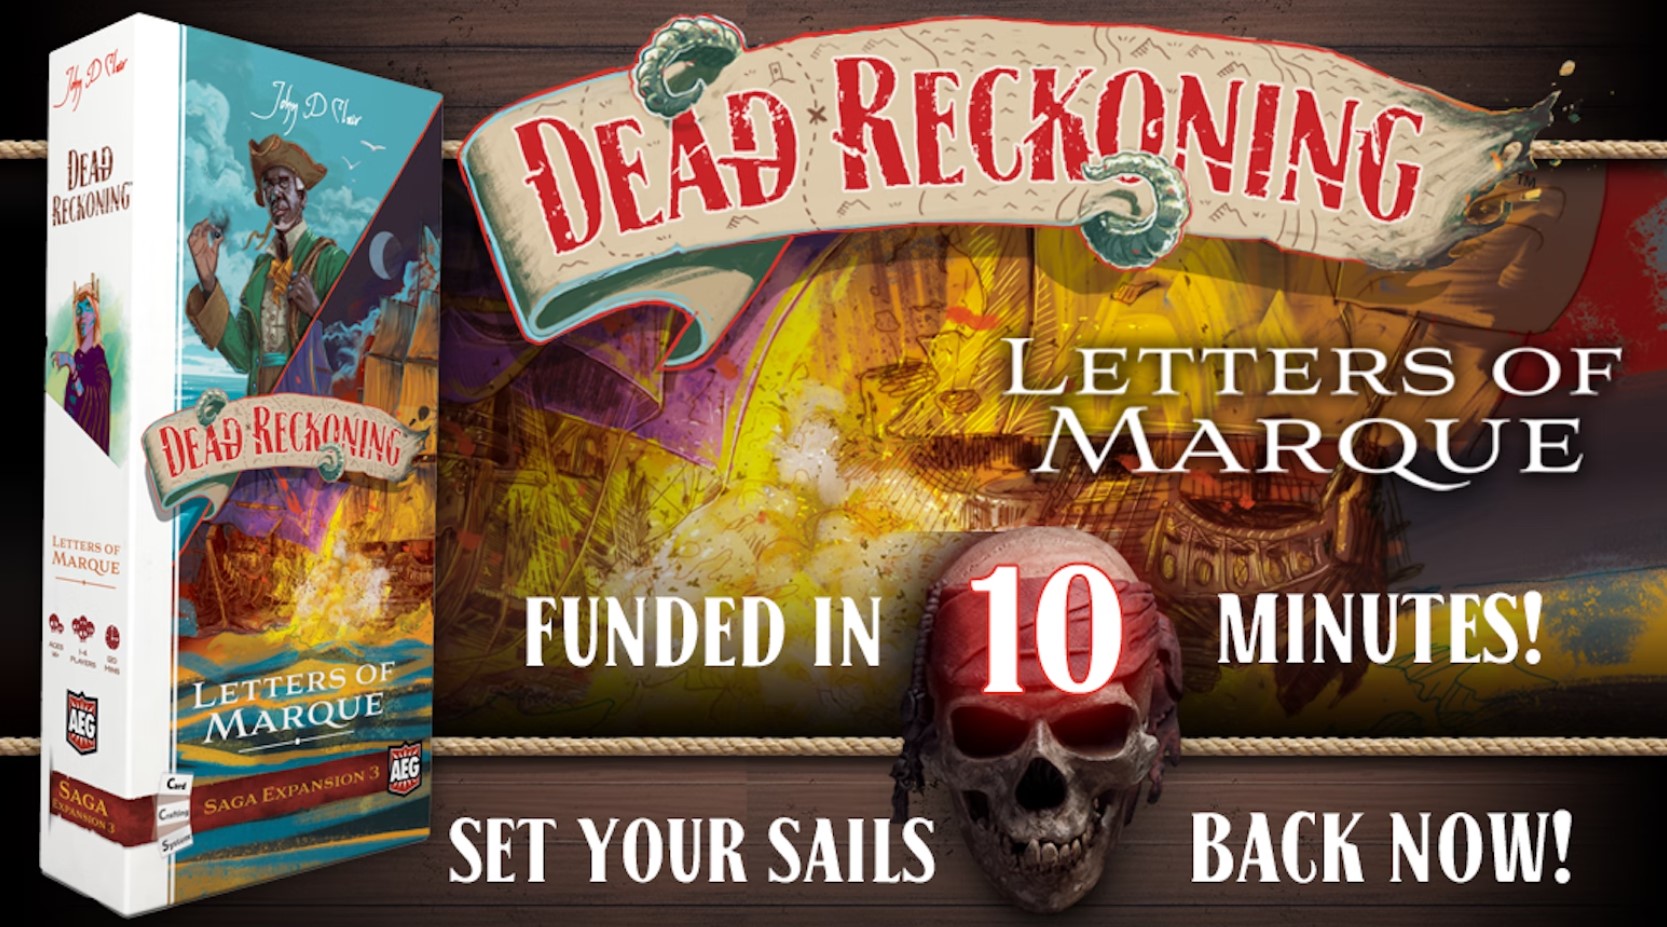 Letters of Marque - Dead Reckoning Kickstarter Image